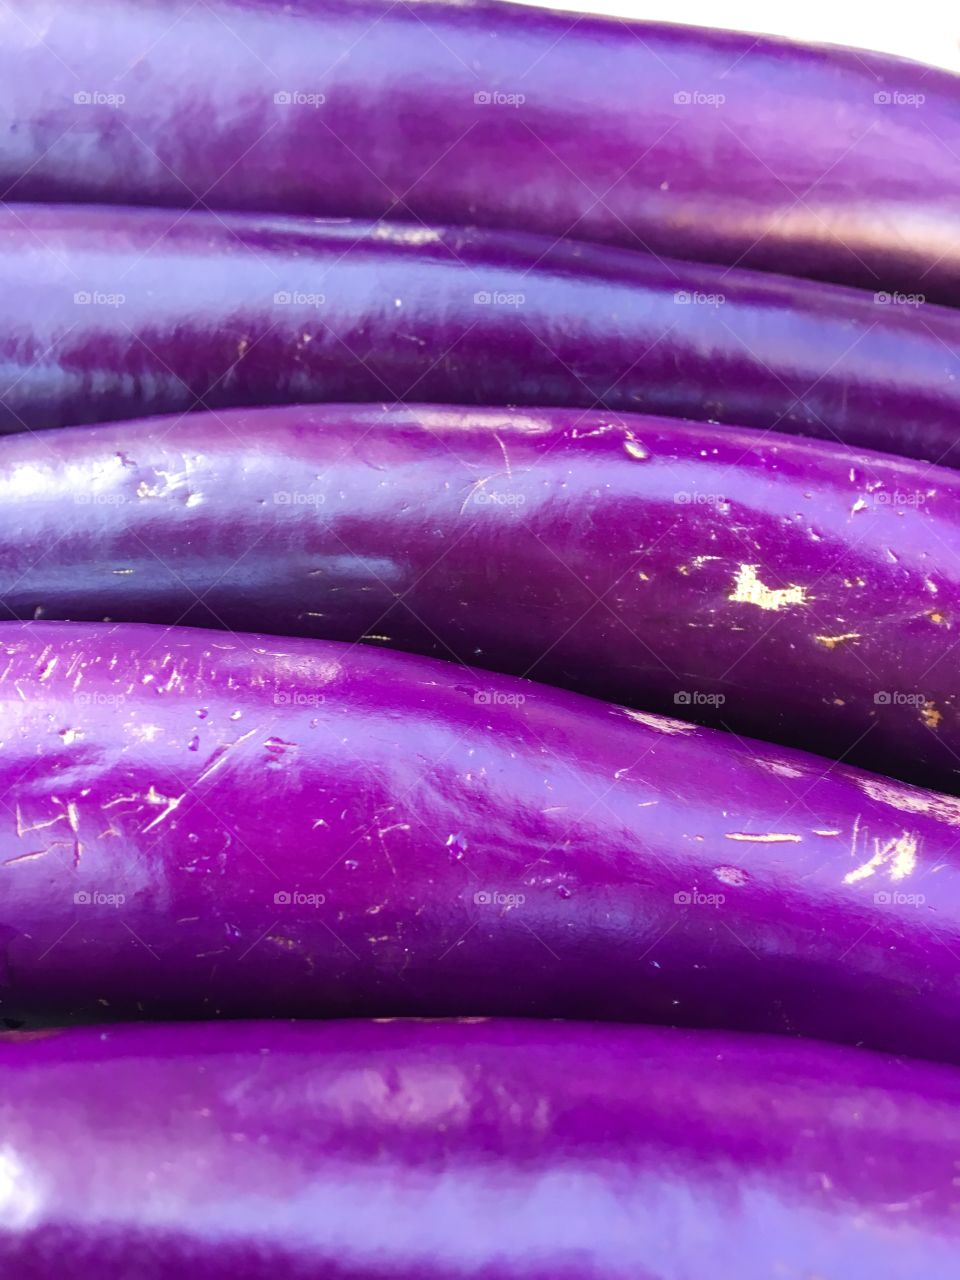 Shades of Eggplant: Purple Story